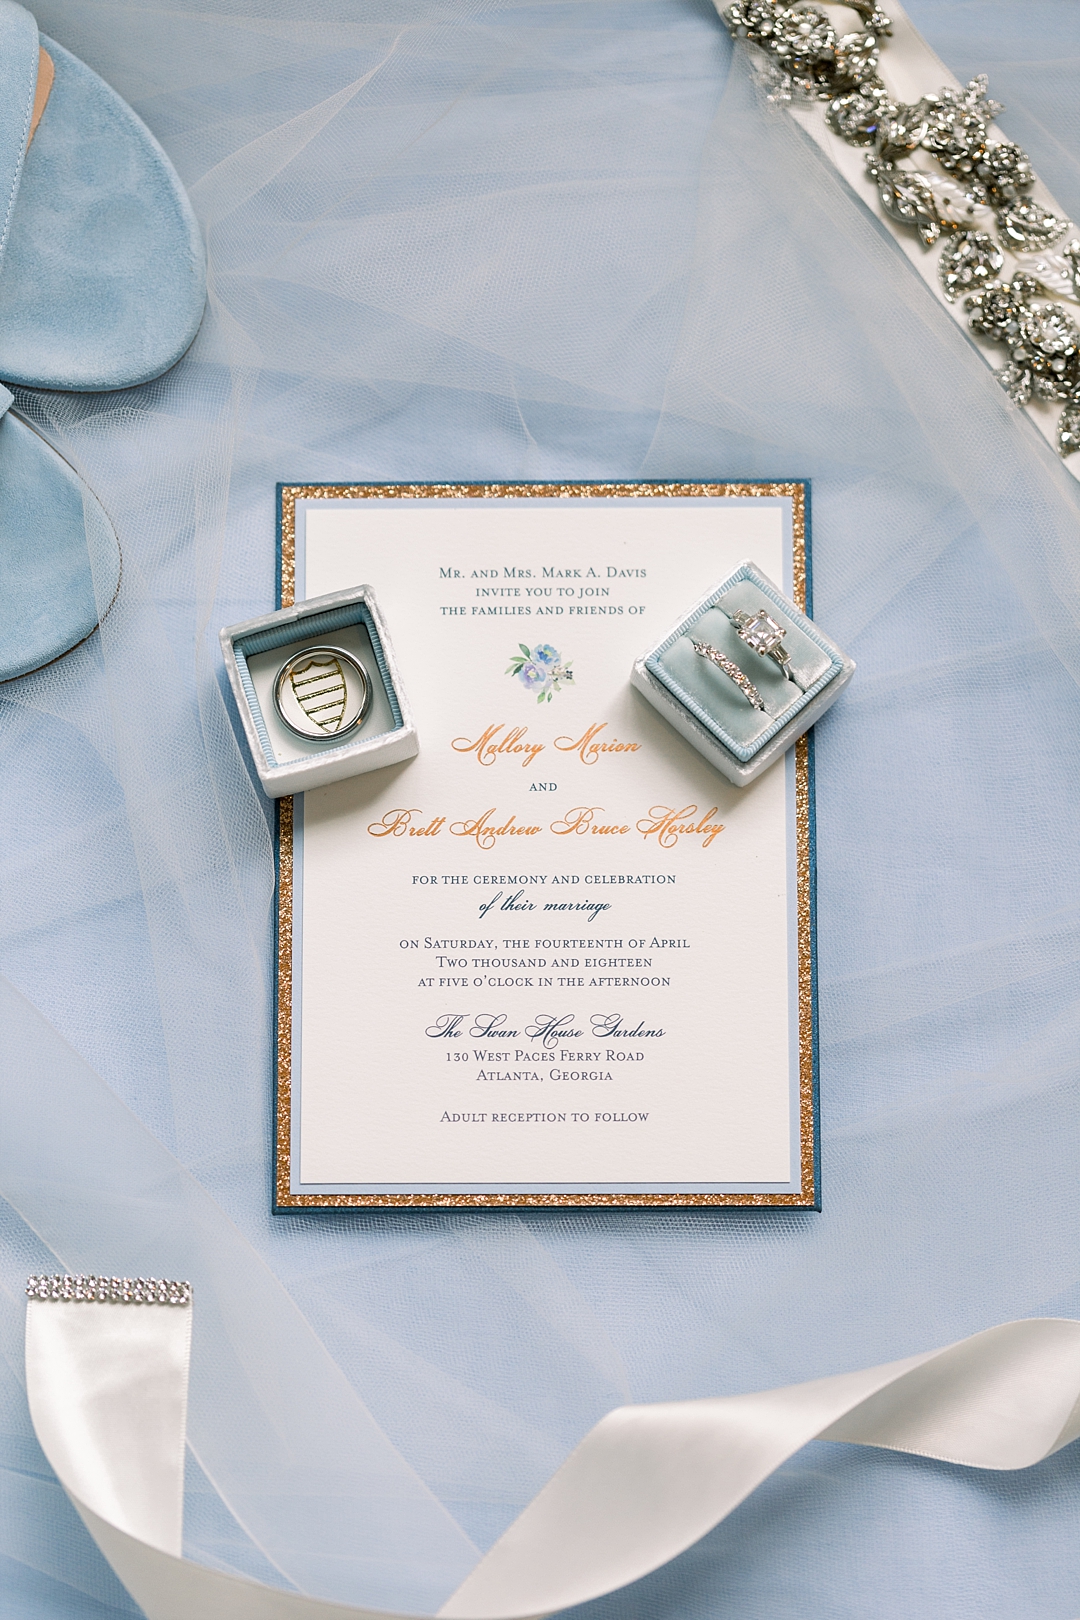 Bridal Details_Vendor details_Photos by Leigh Wolfe, Atlanta's top wedding photographer